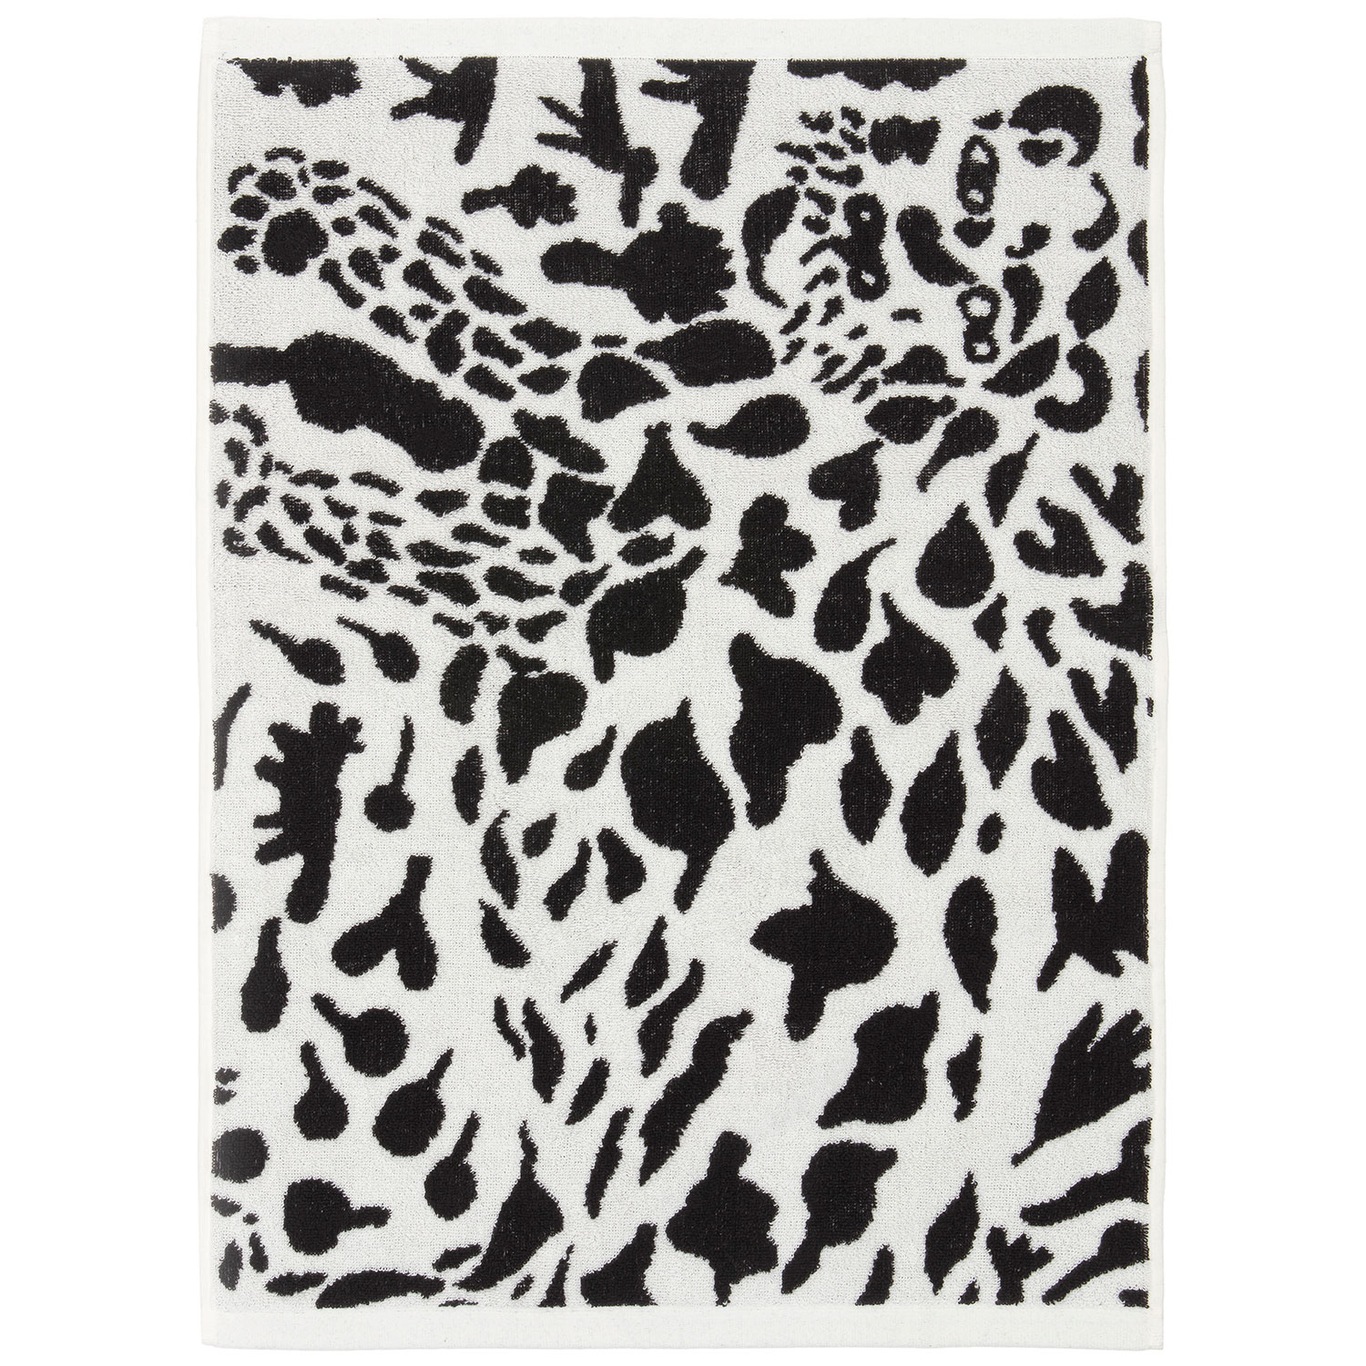 Oiva Toikka Collection Handtuch, 50x70 cm, Cheetah